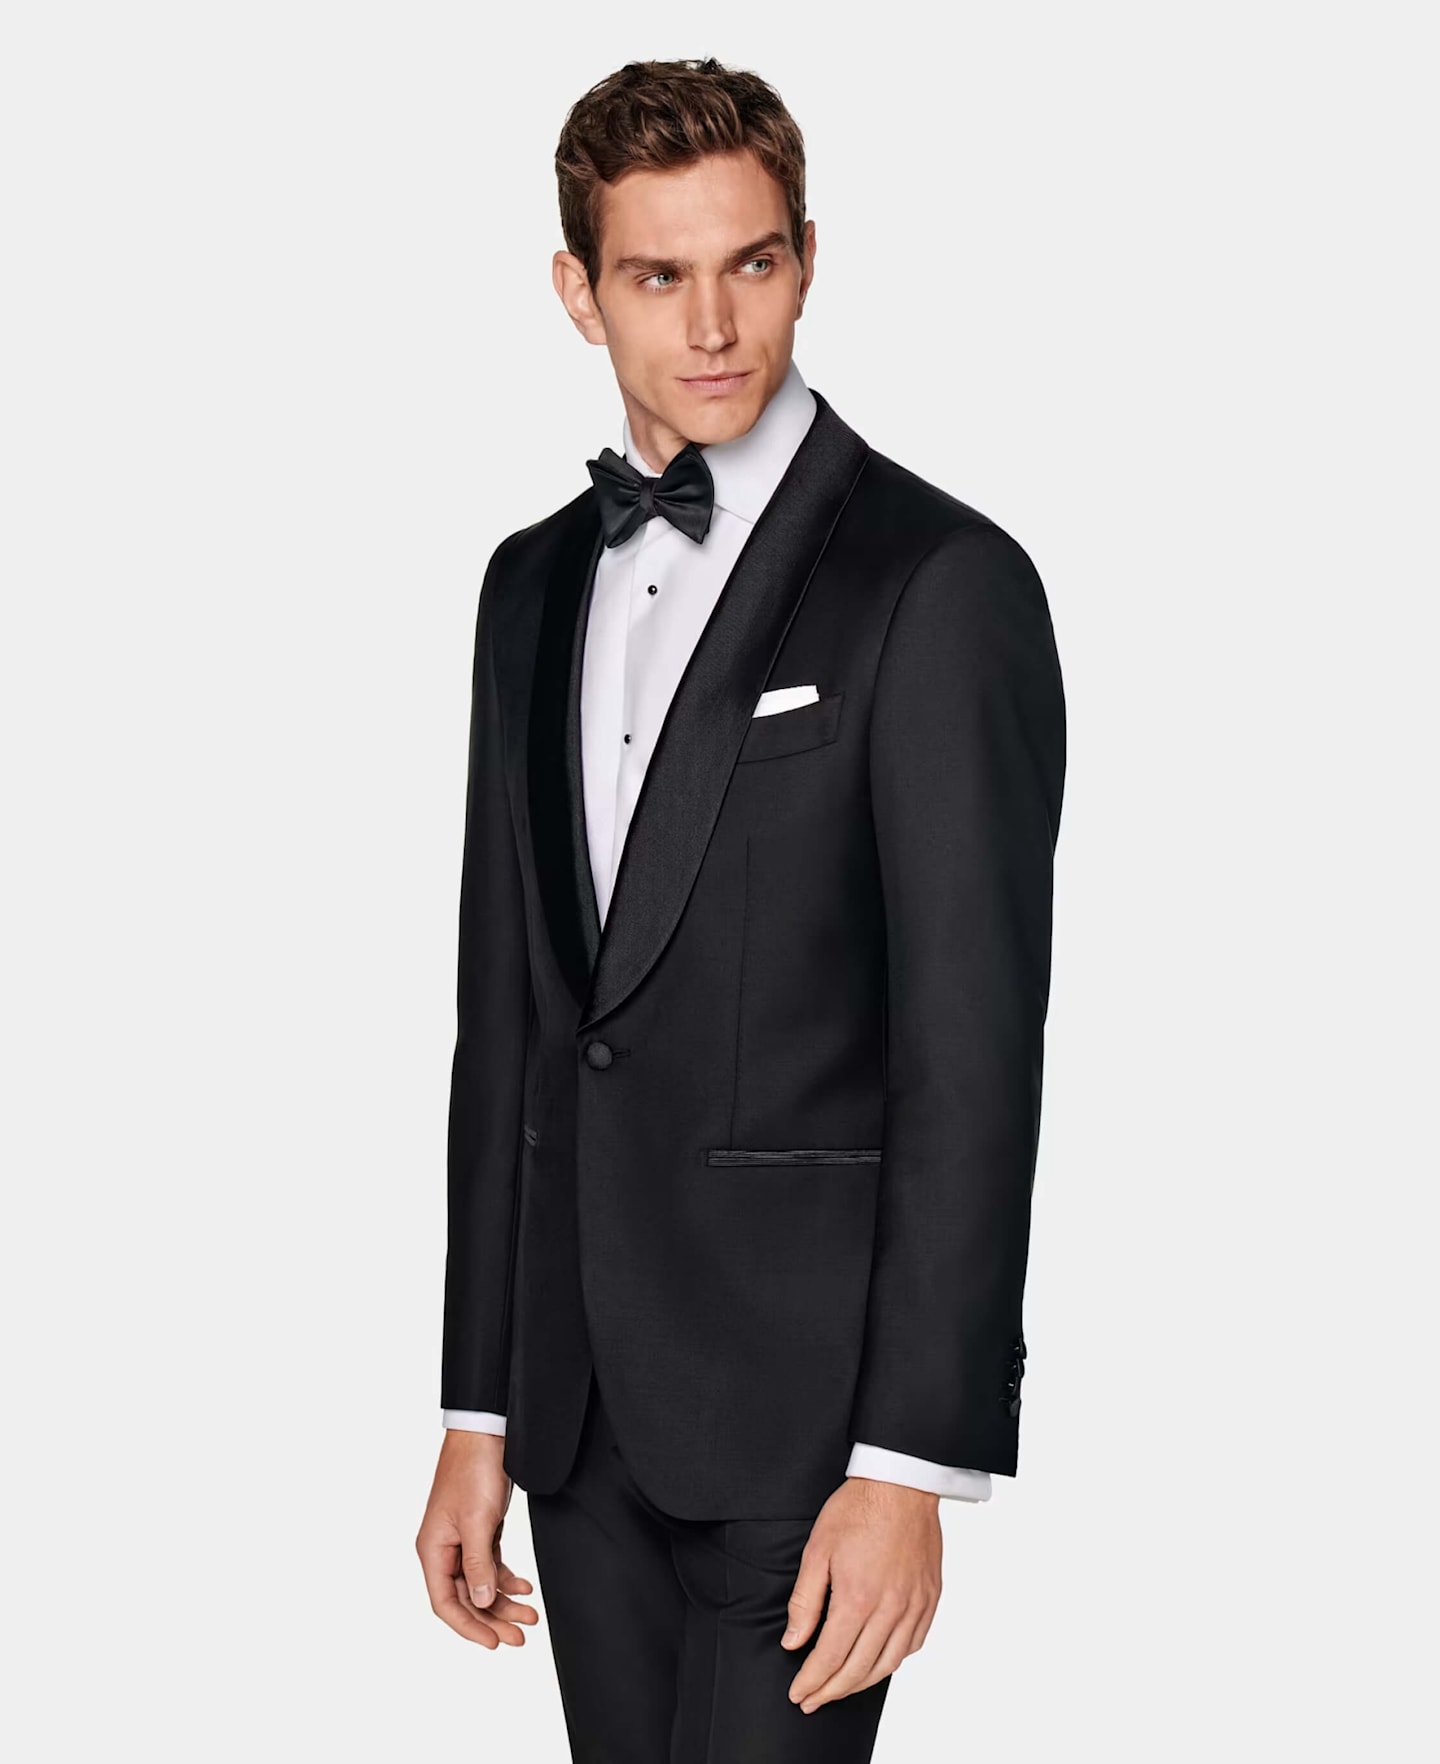 Wedding Suits For Men - Black Tie Dresscode | SUITSUPPLY NL